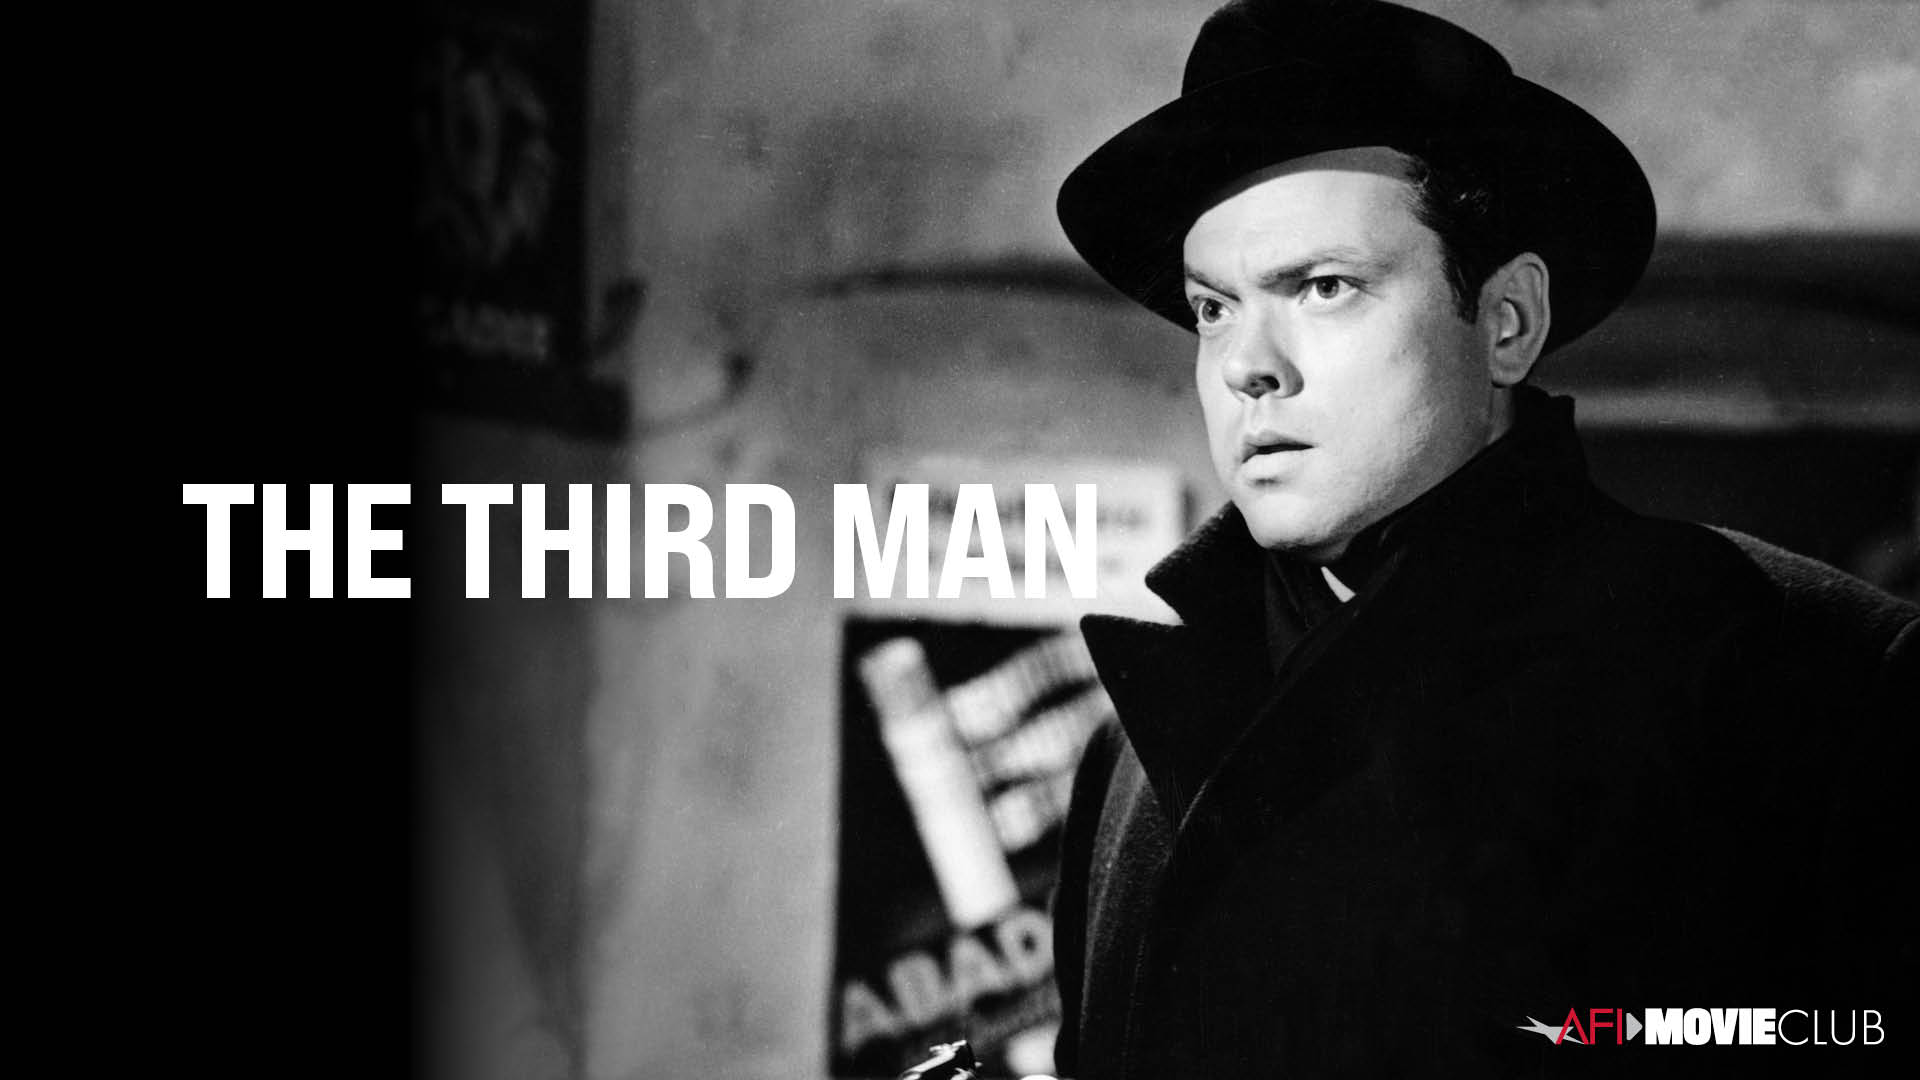 The Third Man Film Still - Orson Welles